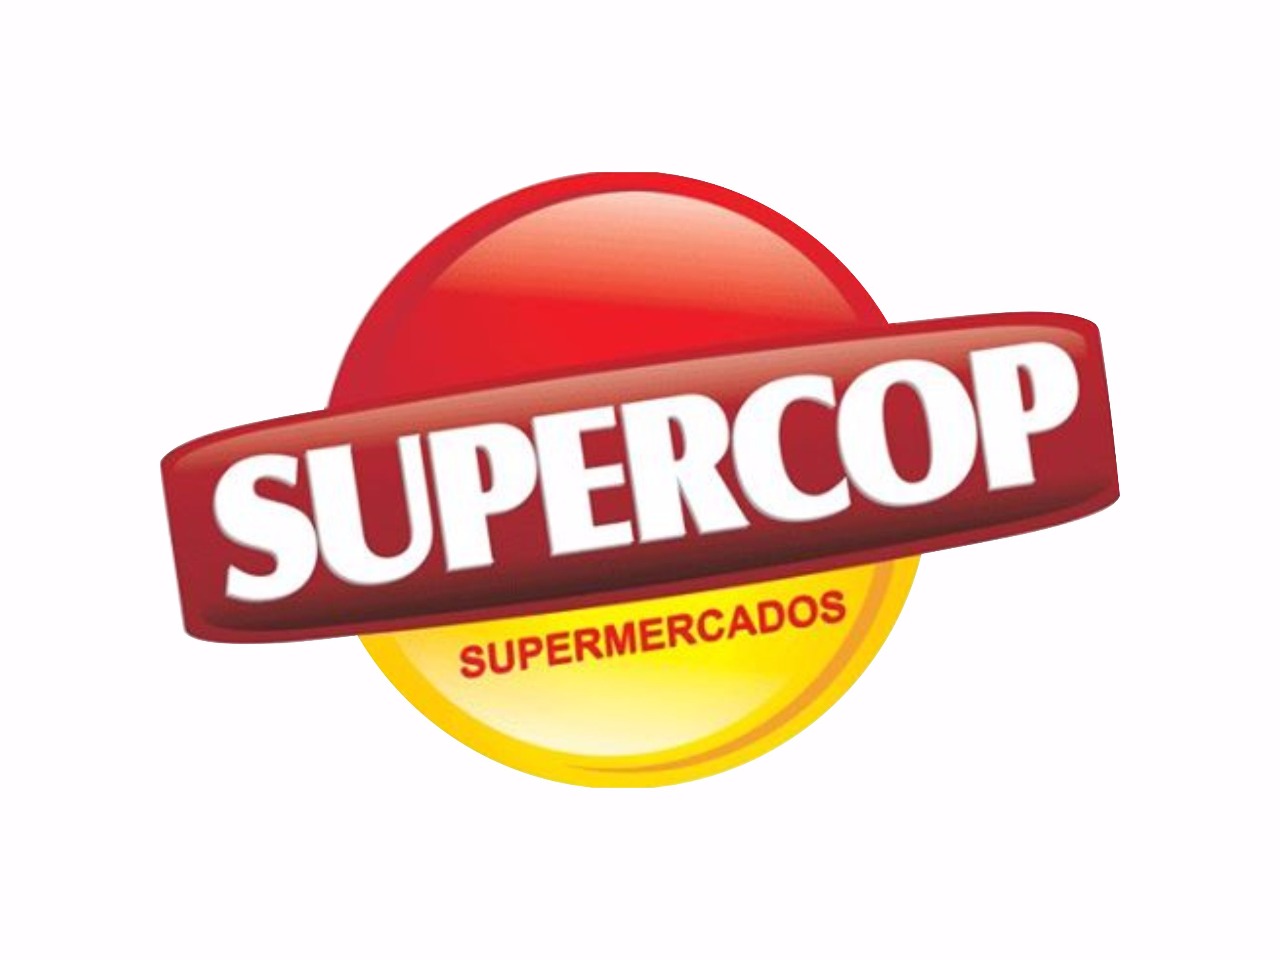 SUPERCOP SUPERMERCADOS